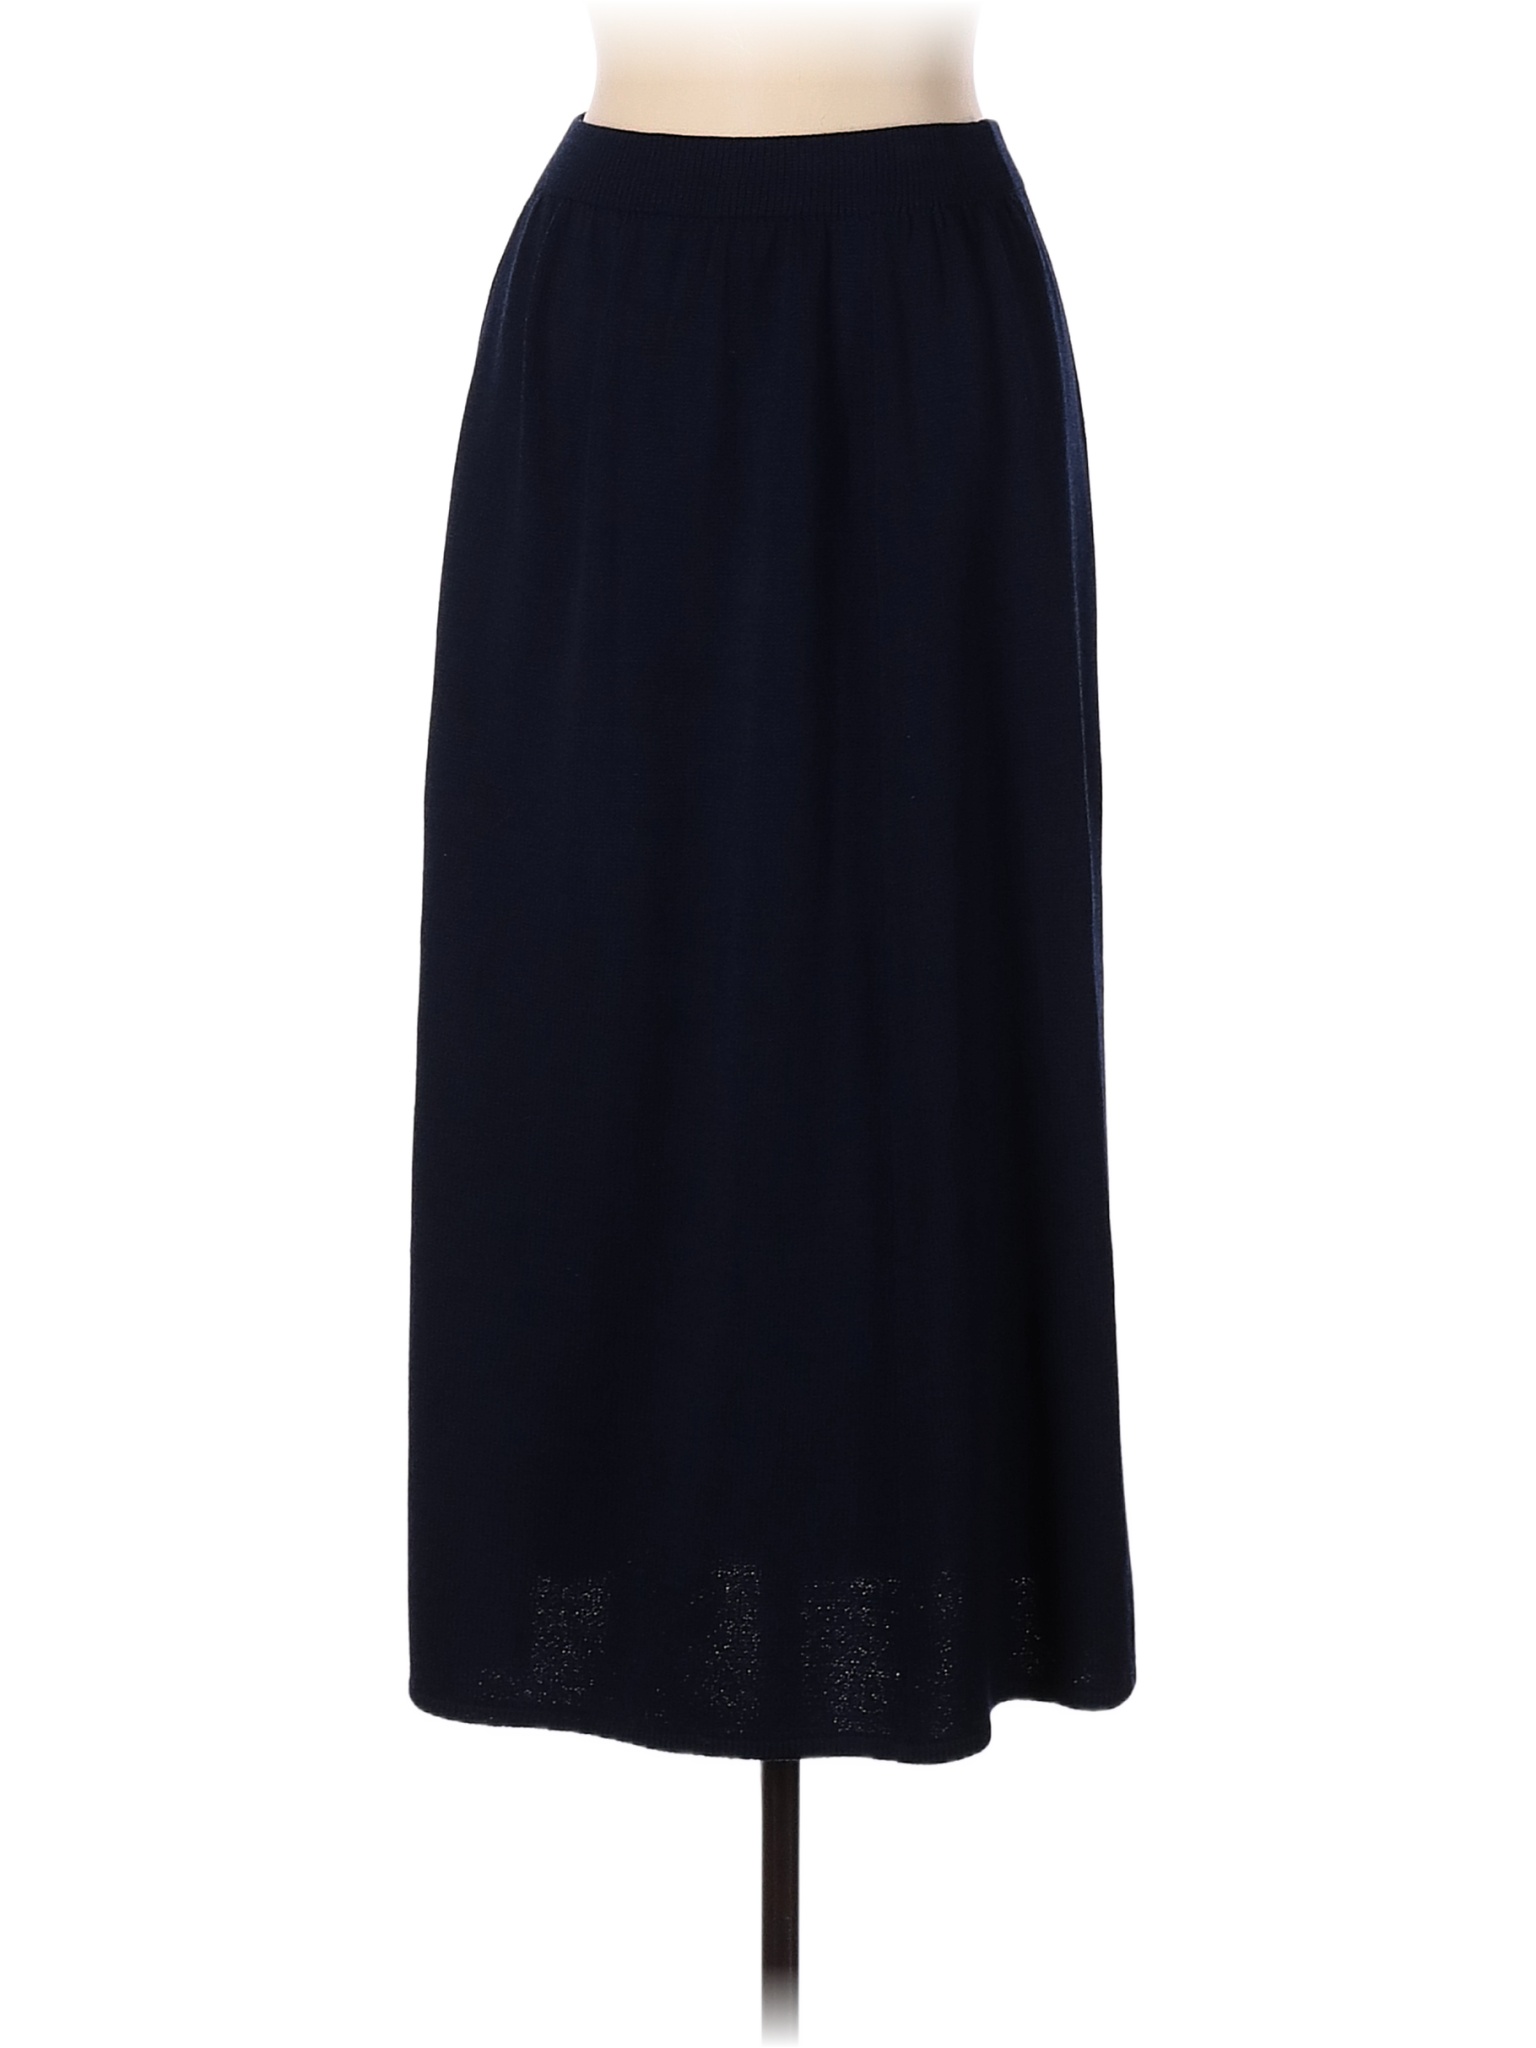 St. John Solid Navy Blue Casual Skirt Size 10 - 84% off | thredUP